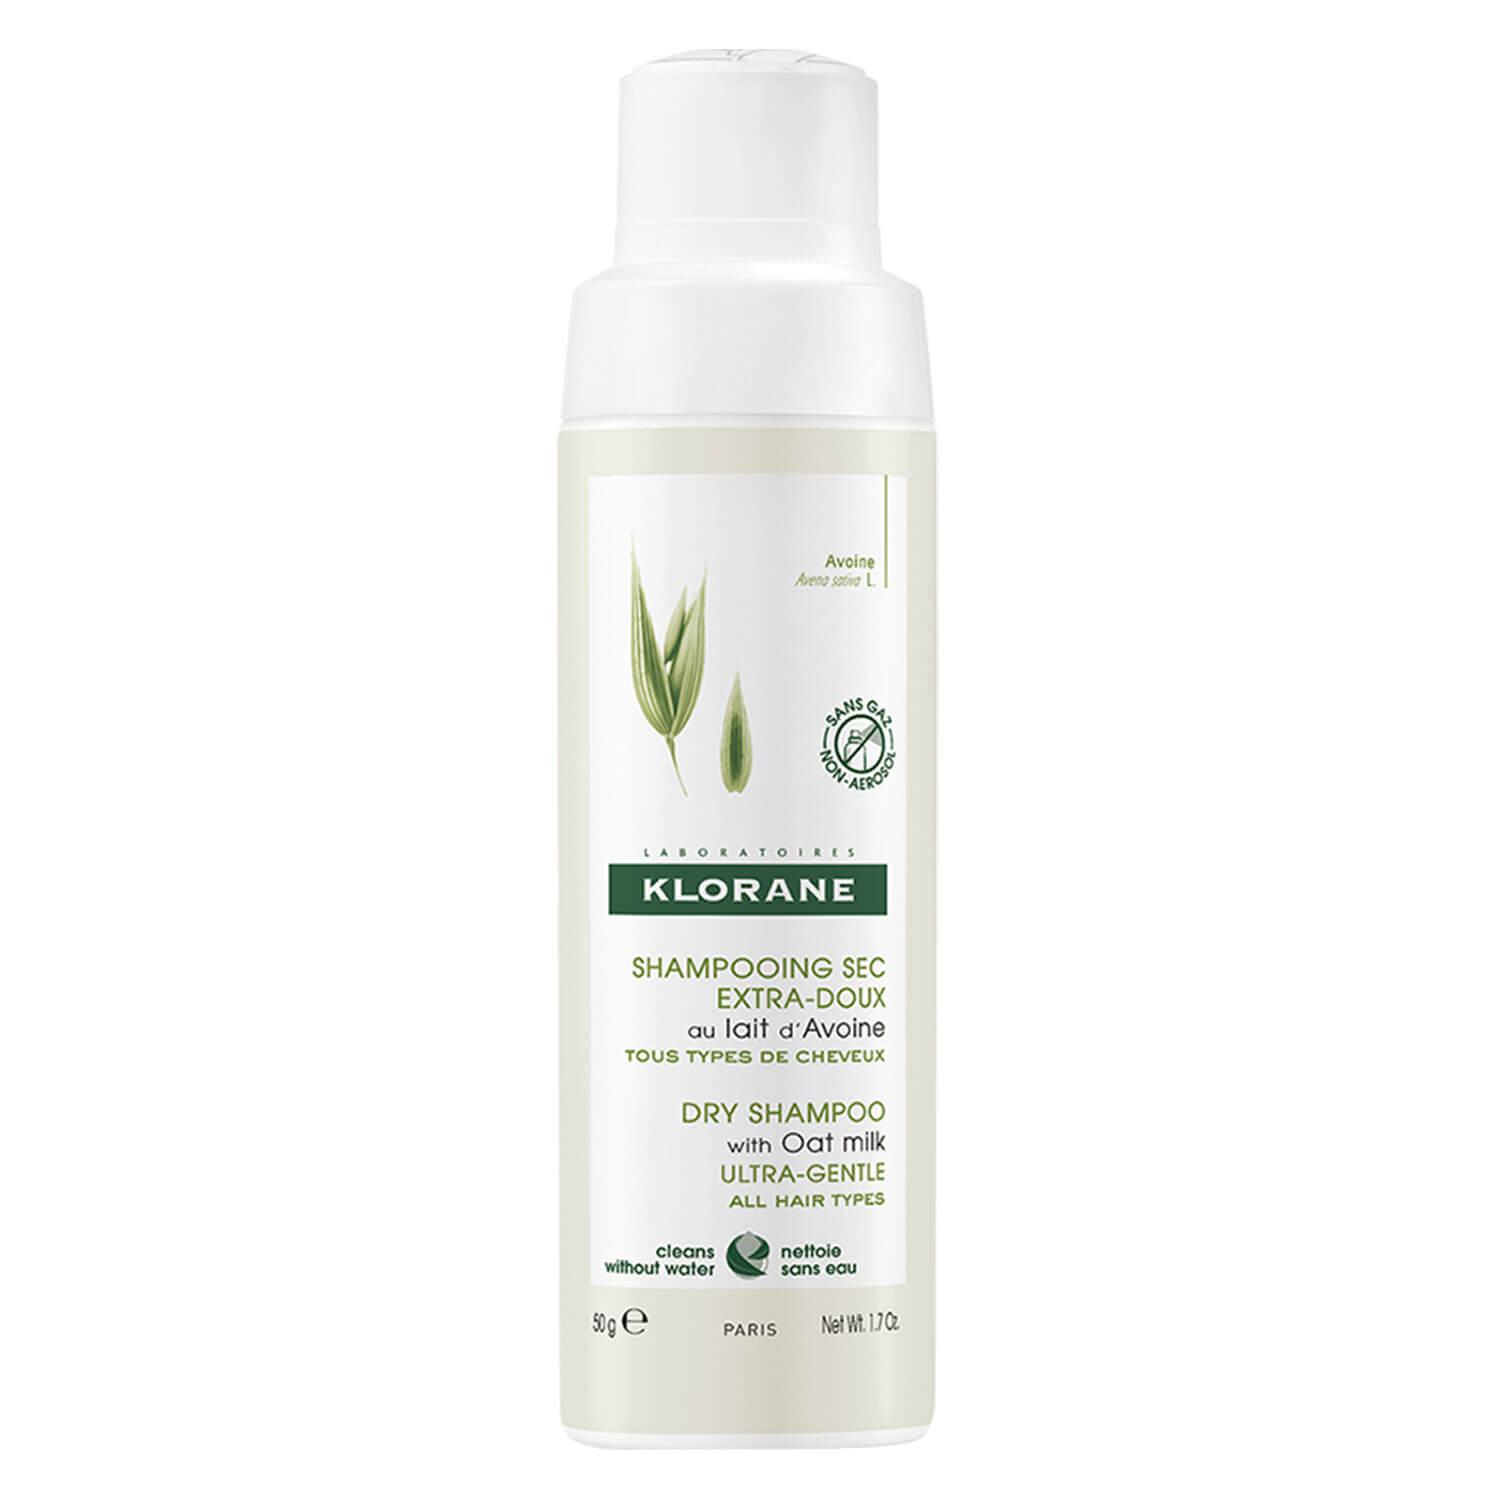 KLORANE Hair - Oat Milk Dry Shampoo Non-Aerosol